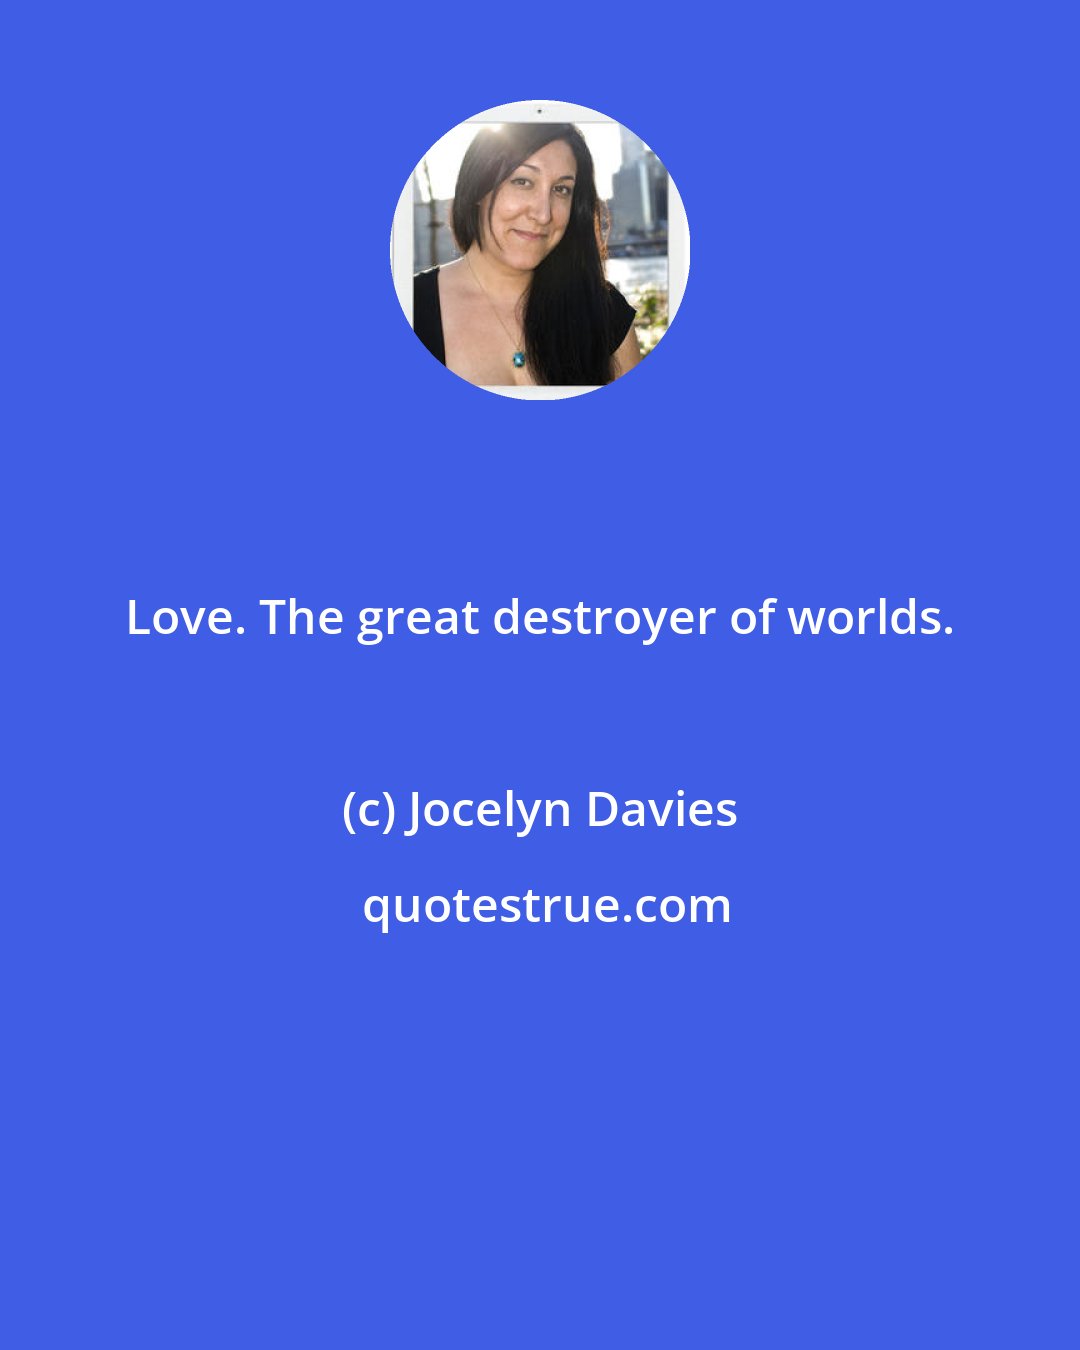 Jocelyn Davies: Love. The great destroyer of worlds.